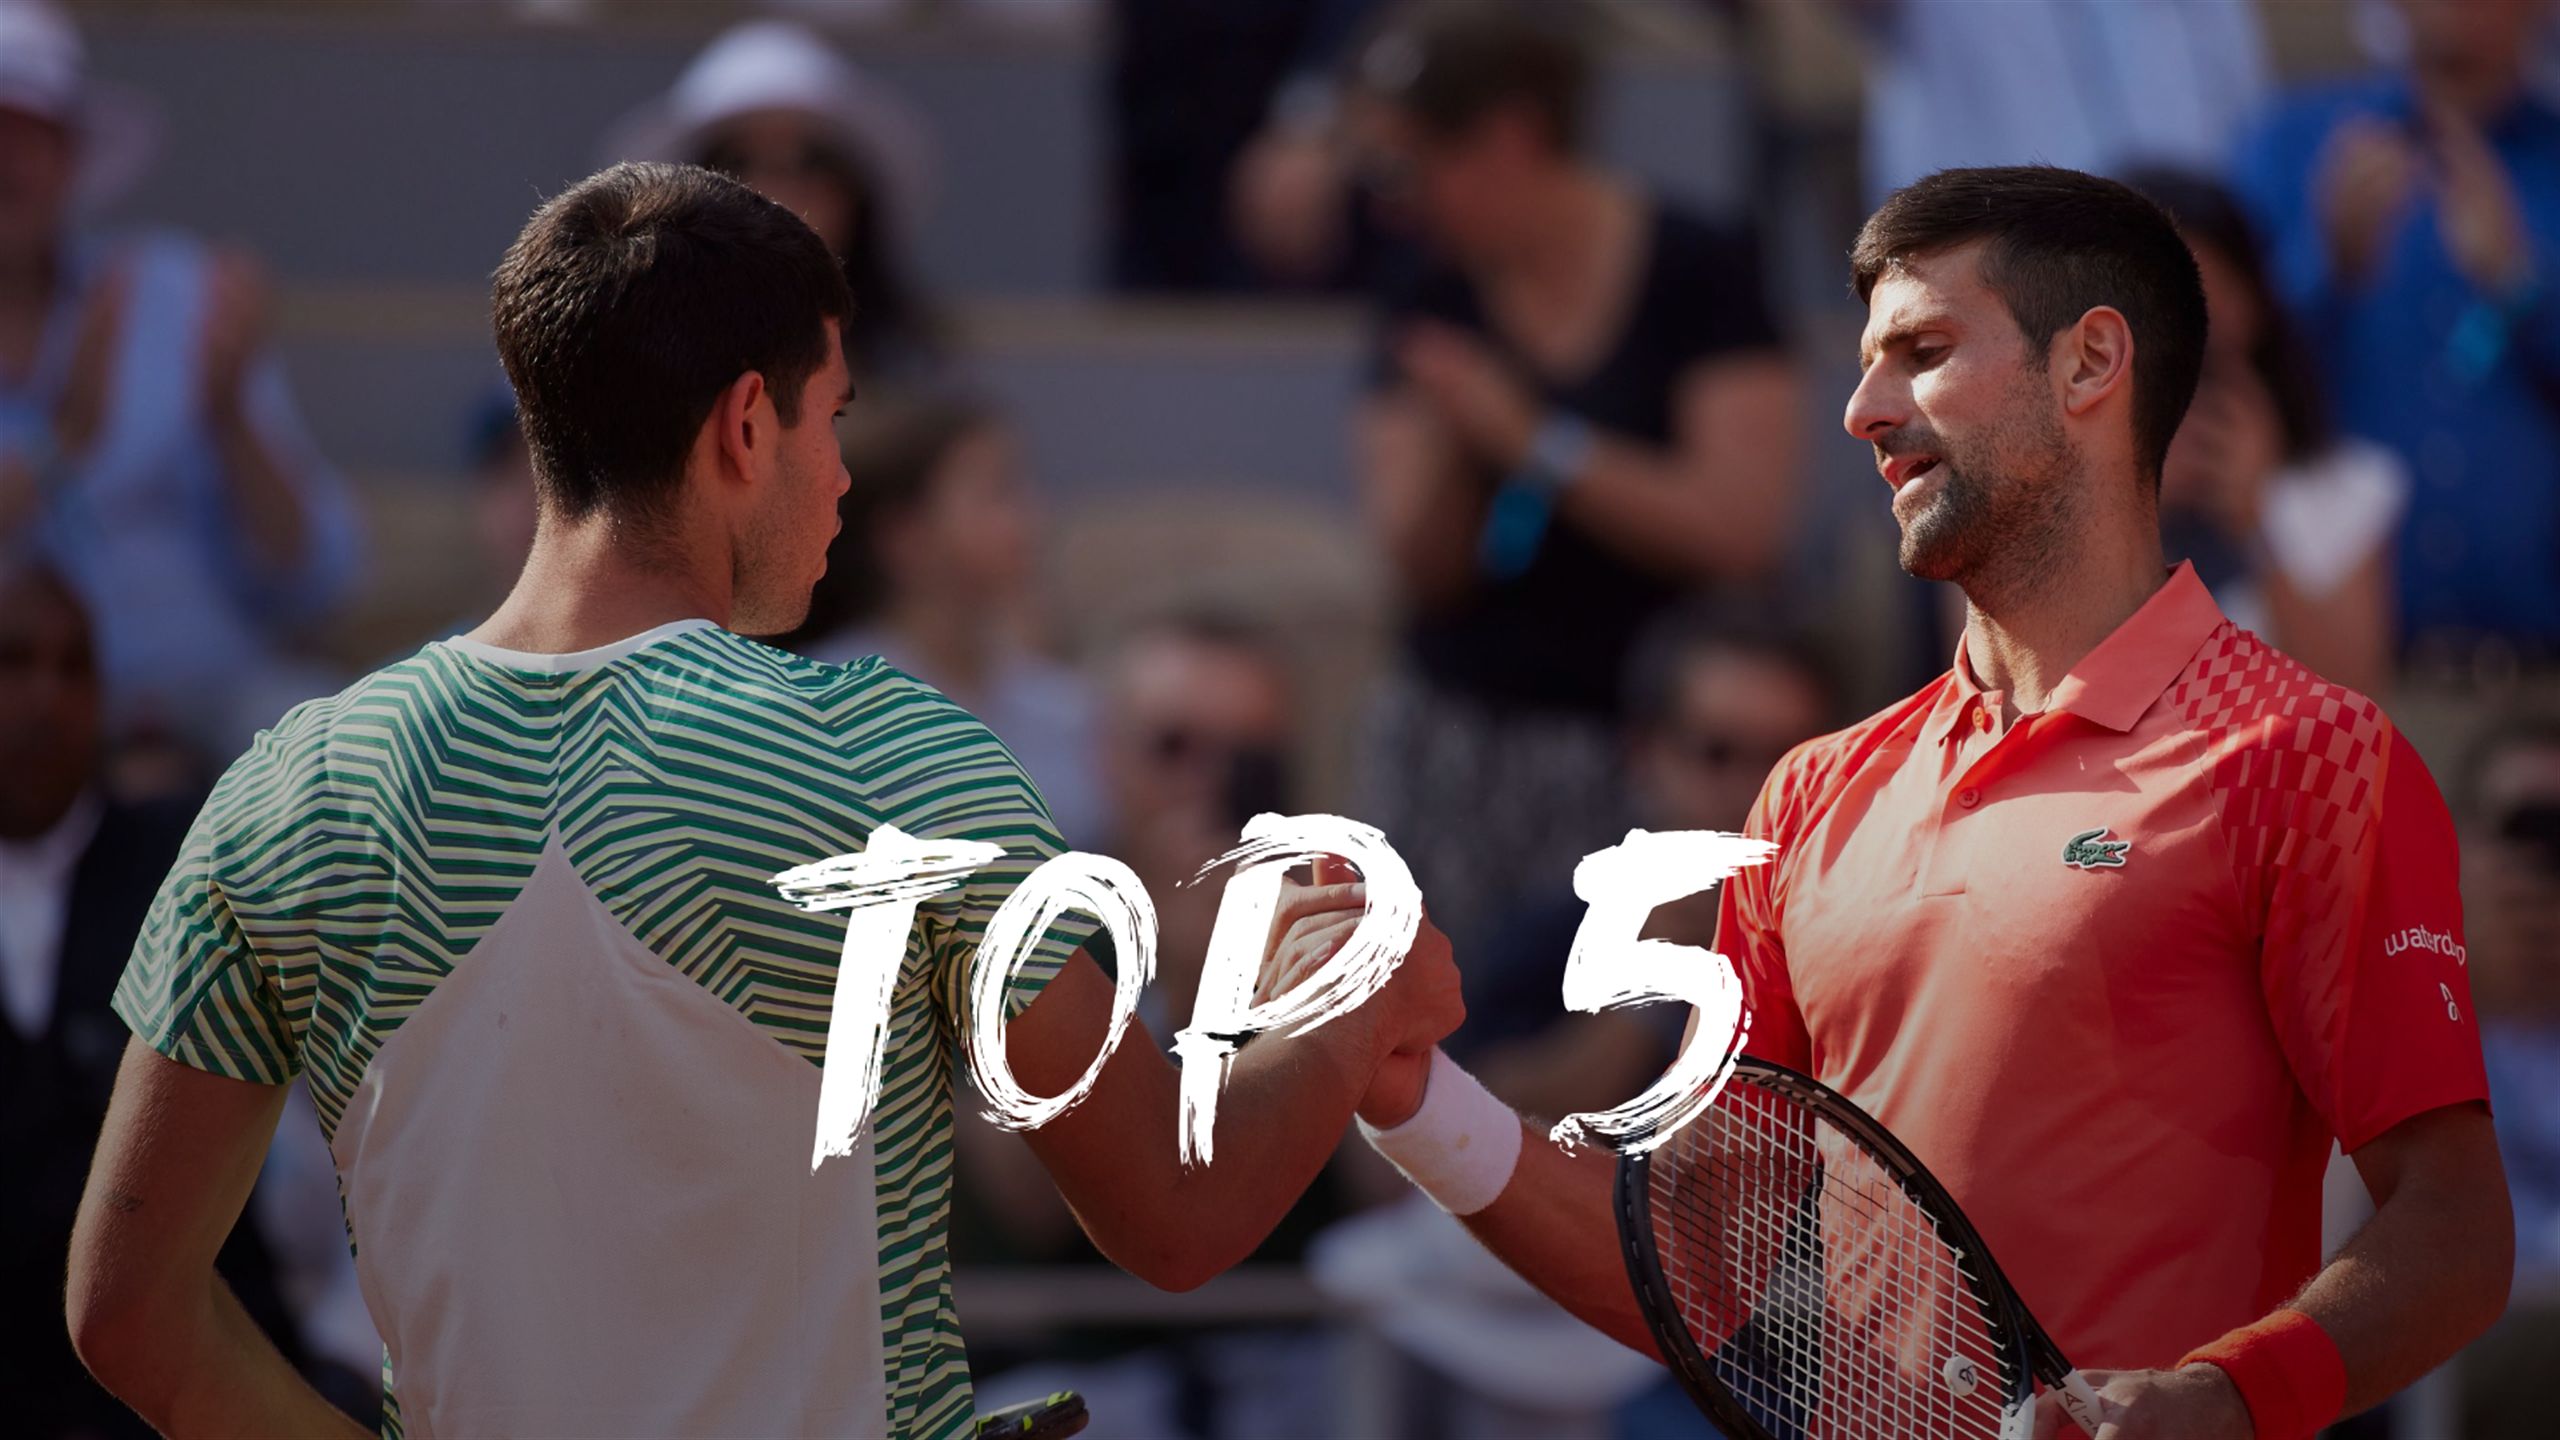 French Open Top 5 shots - Carlos Alcaraz and Novak Djokovic produce outrageous tennis in semi-final - Tennis video